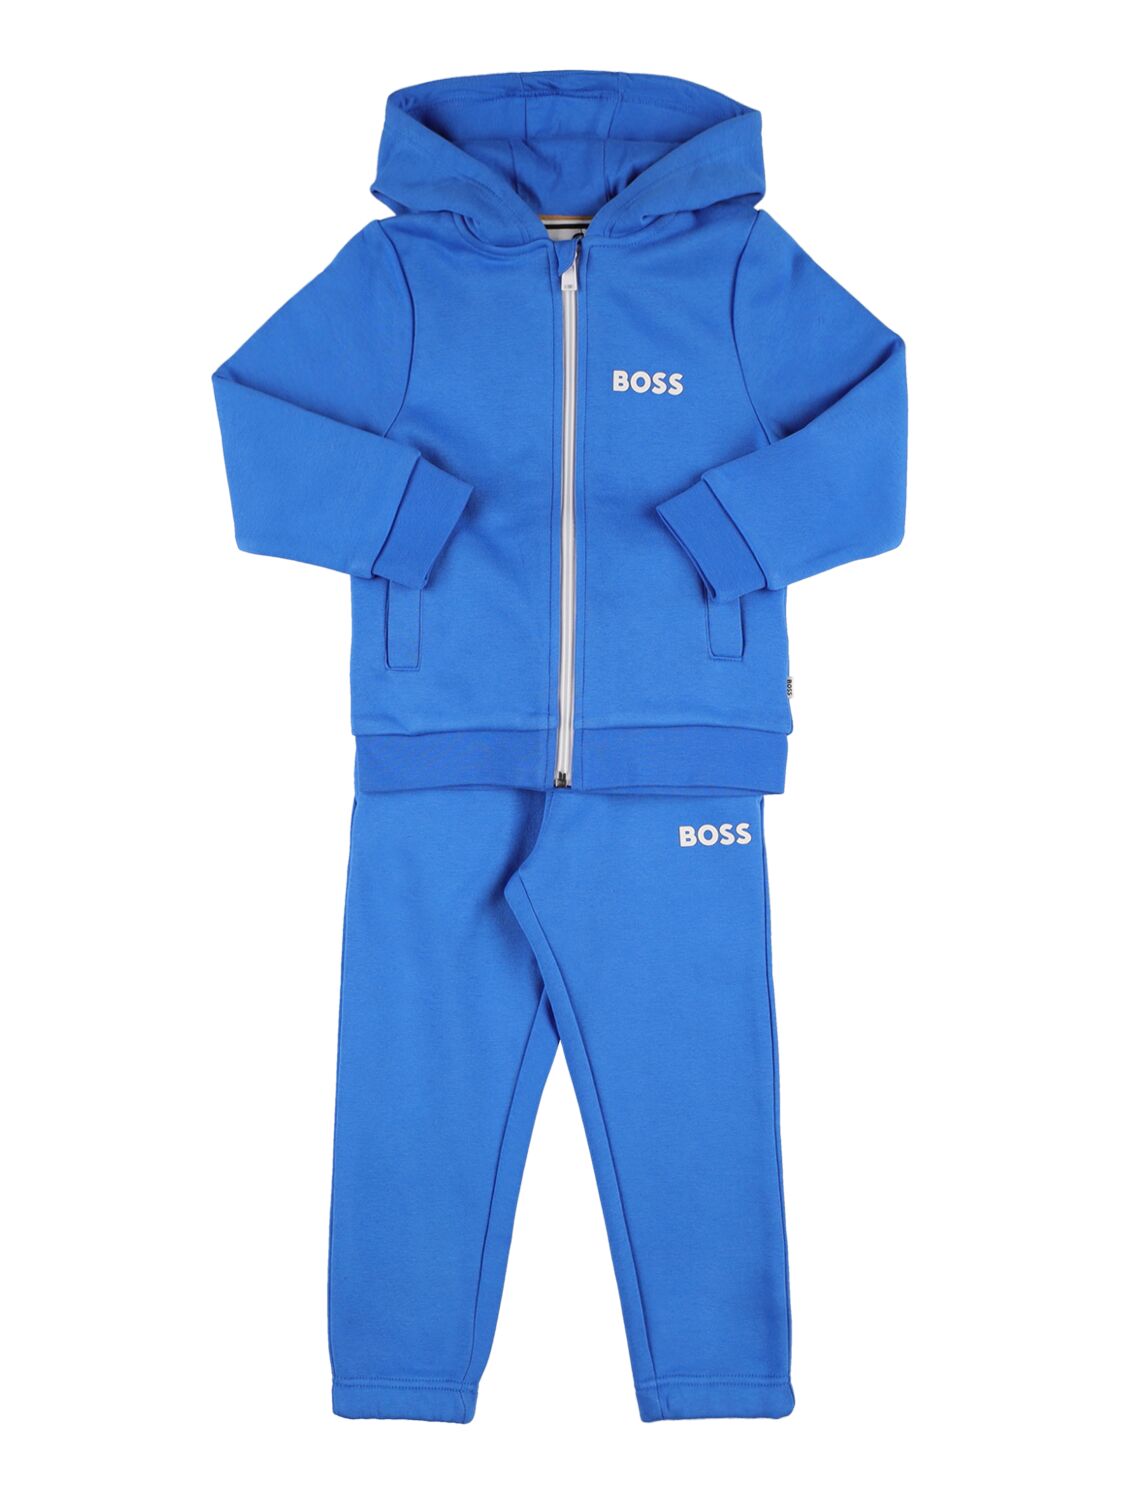 Hugo Boss Kids' Cotton Blend Hoodie & Sweatpants W/ Logo In Royal Blue